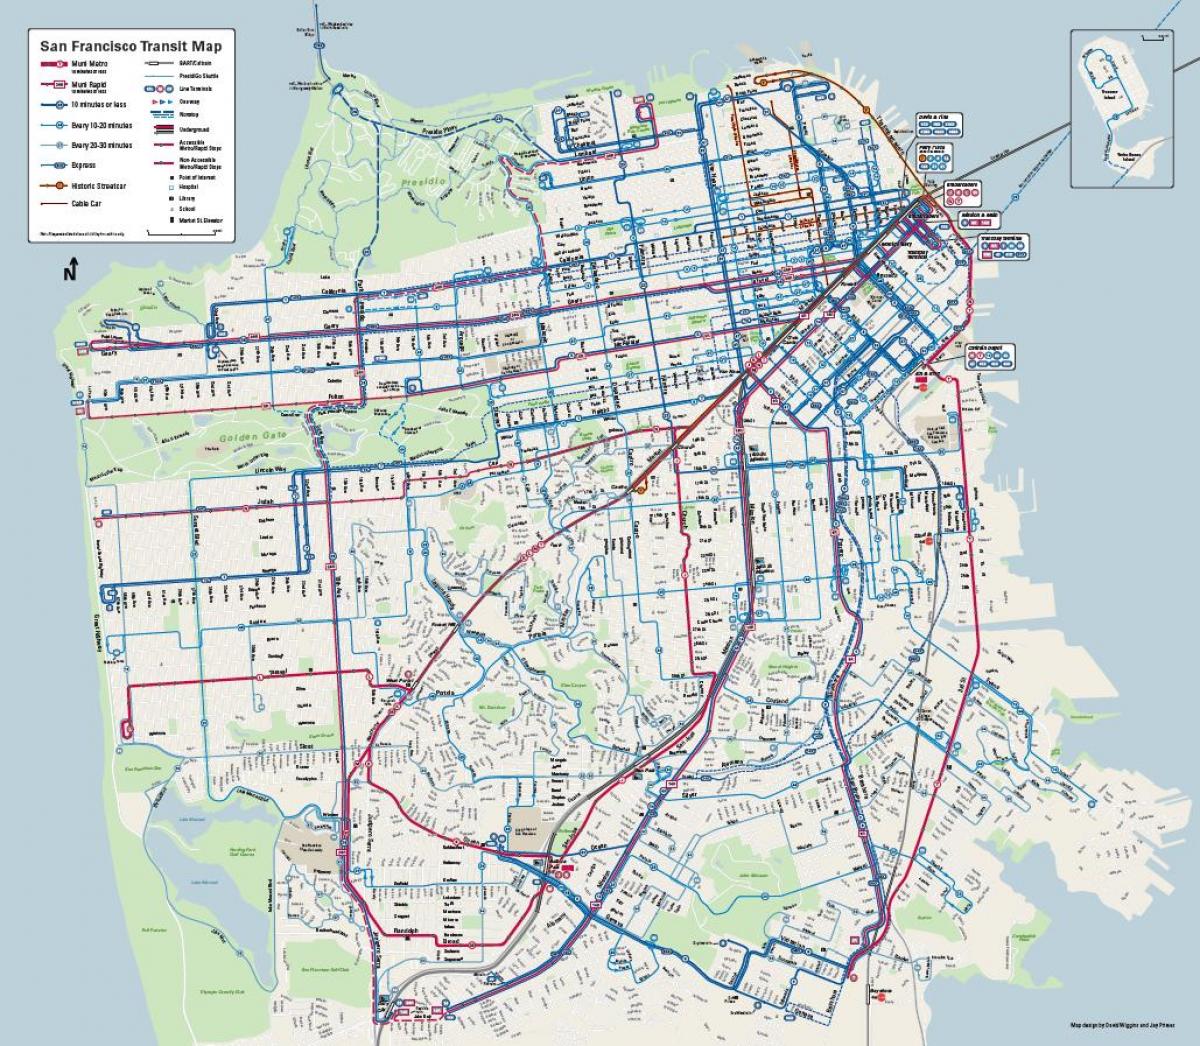 Сан Франциско автобусны систем нь газрын зураг